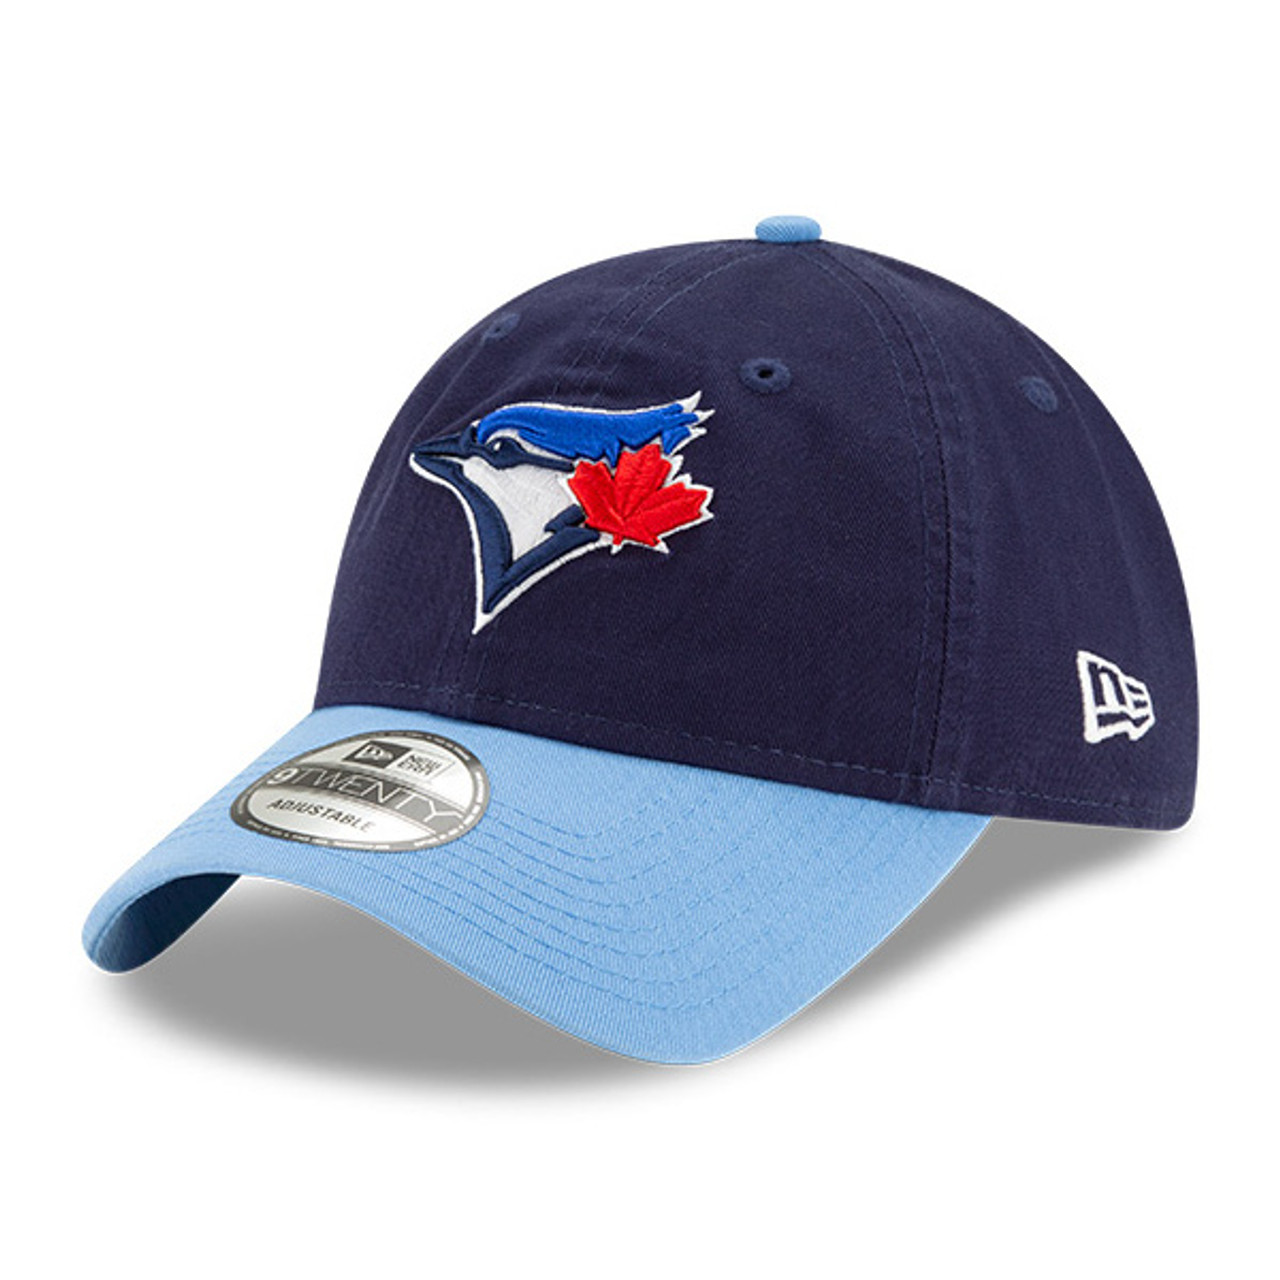 Toronto Blue Jays Hats, Blue Jays Gear, Toronto Blue Jays Pro Shop